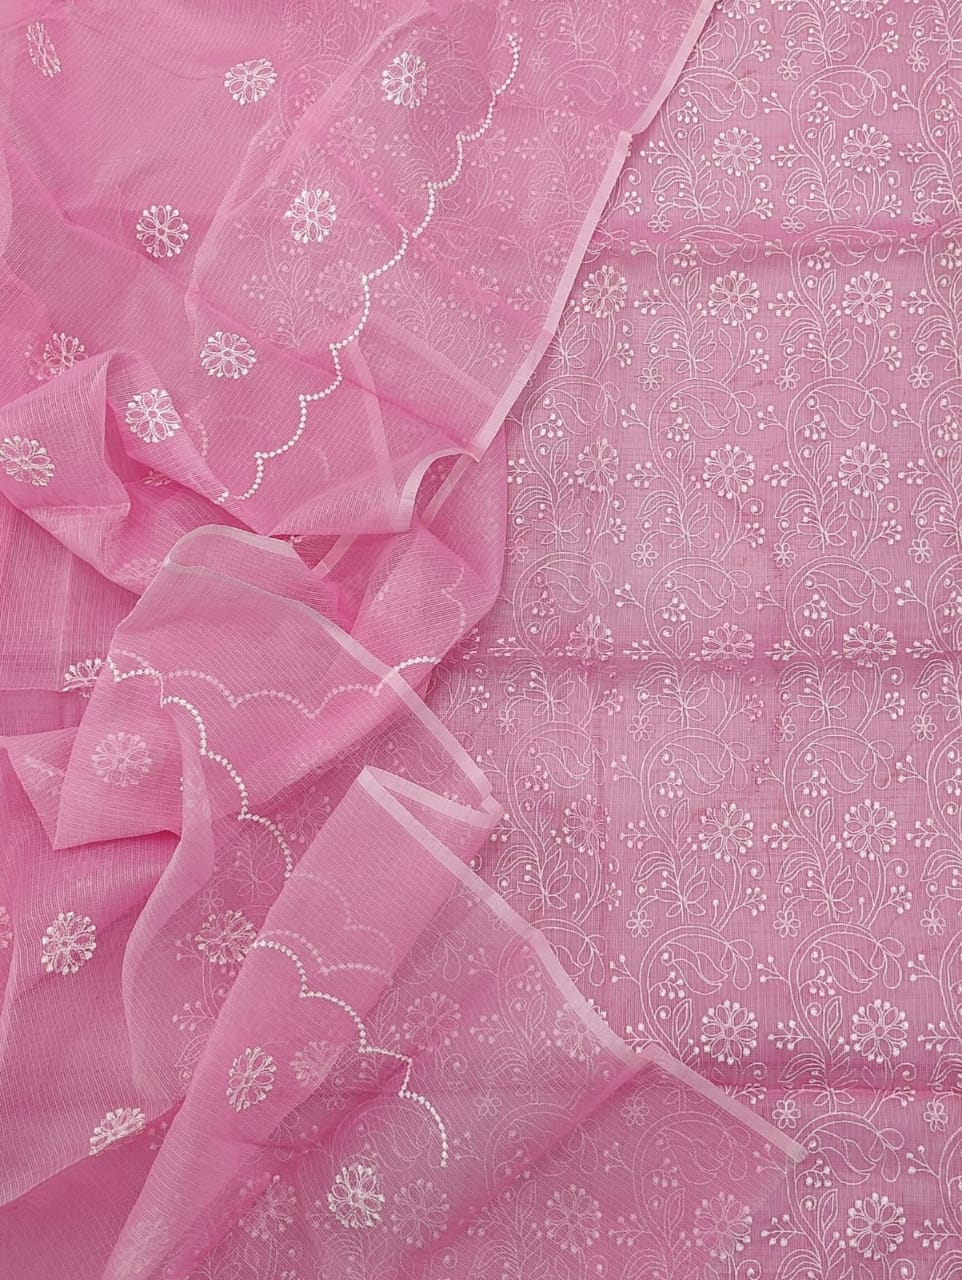 Kota Doria Embroidery Work Suits Pink Colour (Top+Dupatta+Bottom)